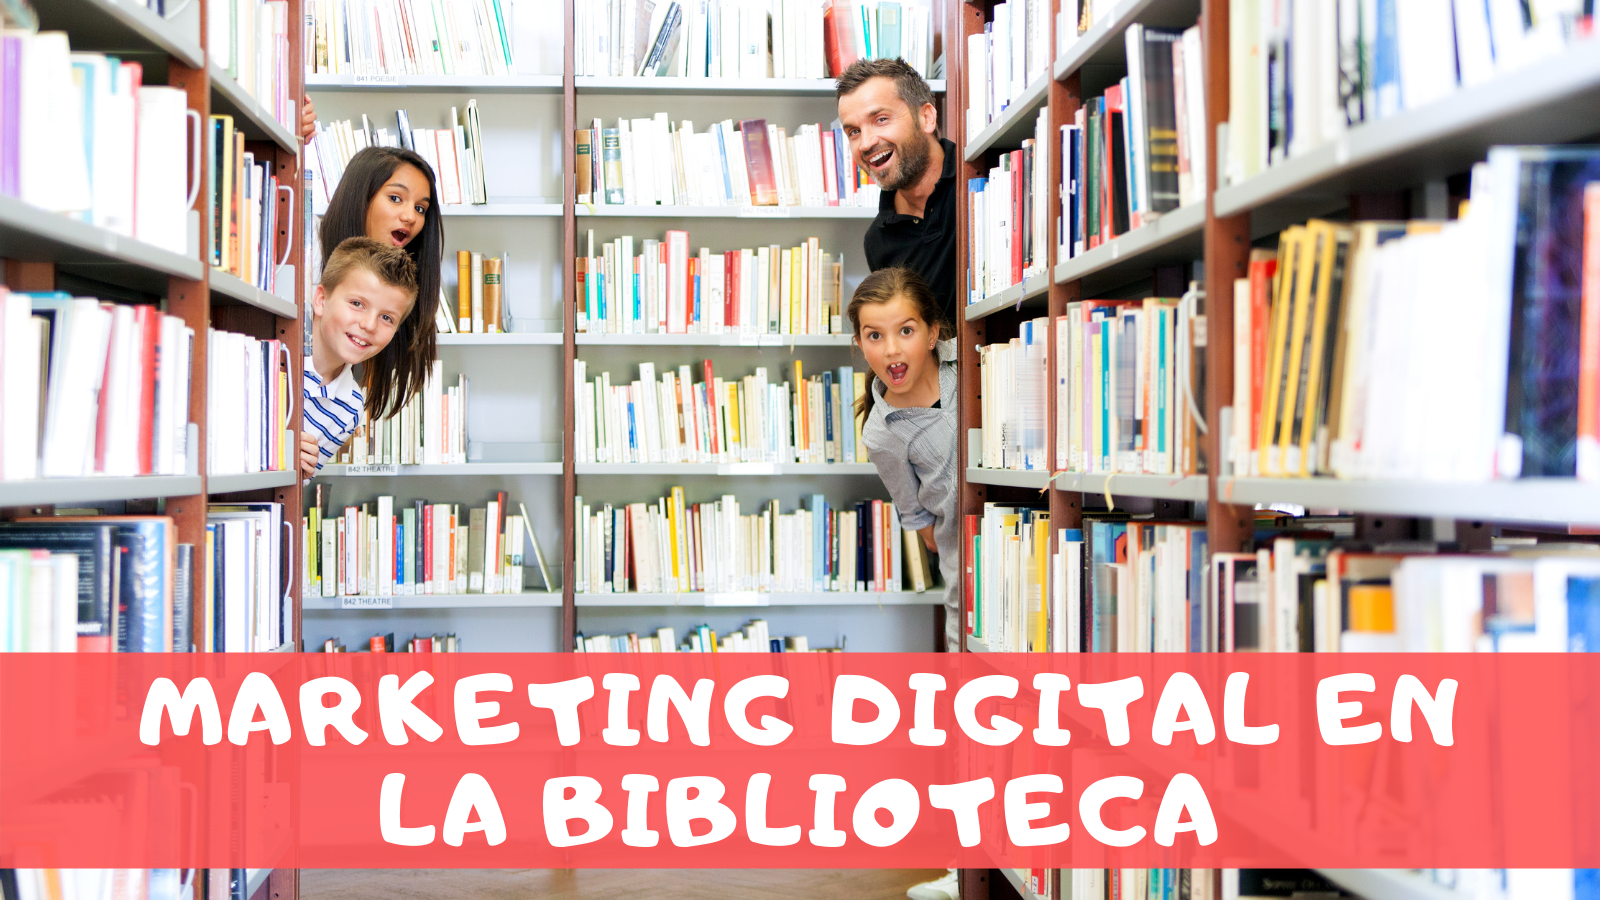 MarketingDigitalBiblioteca